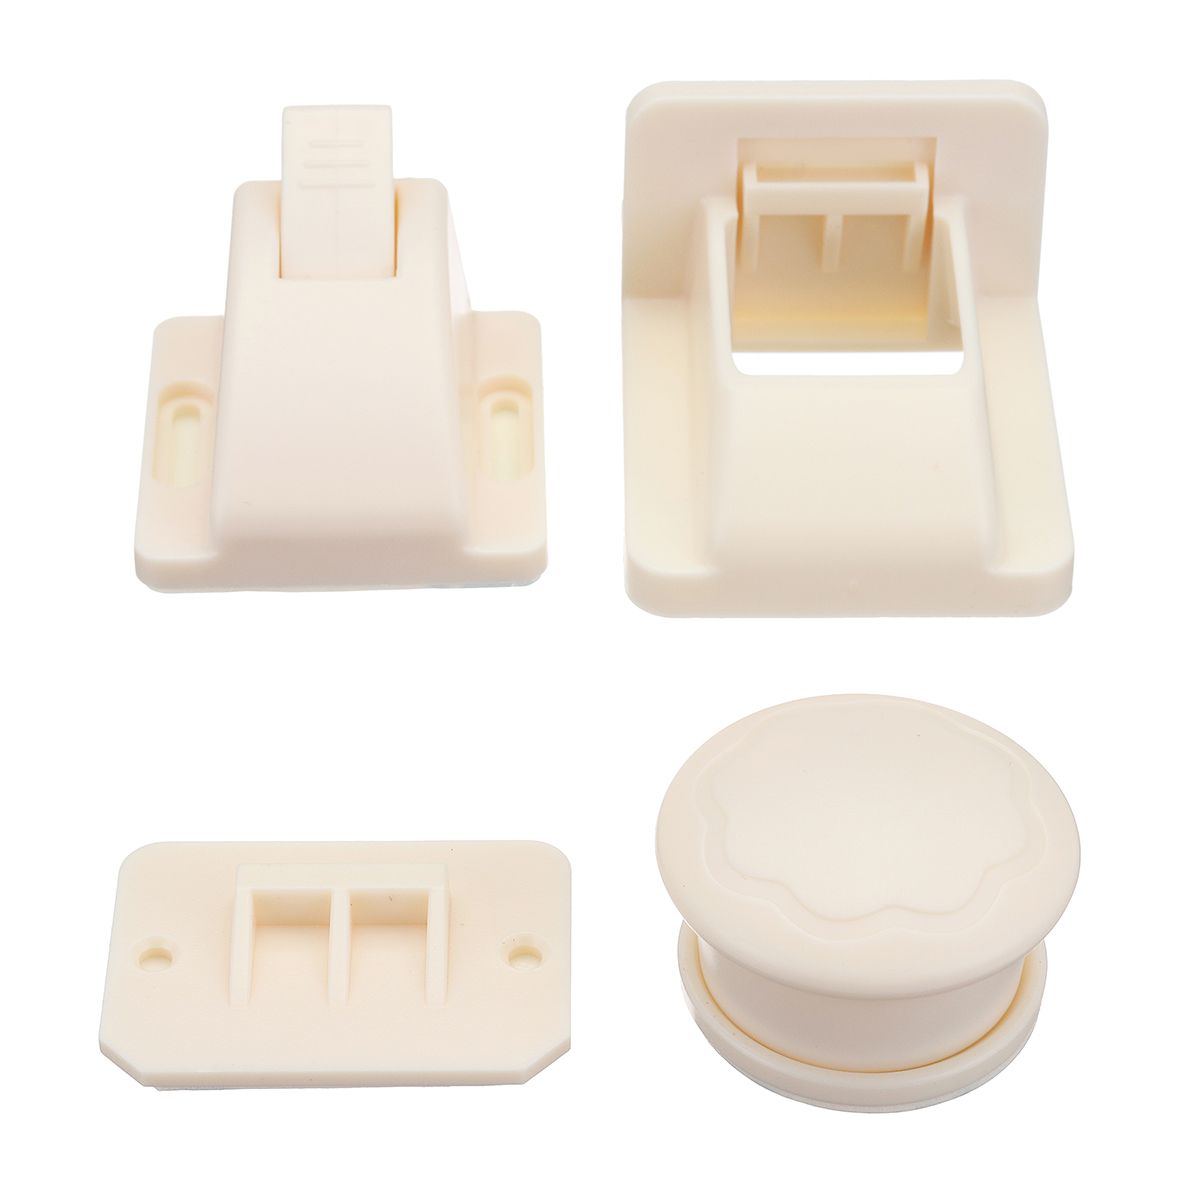 4Pcsset-Baby-Safety-Magnetic-Cabinet-Locks-Adhesive-Lock-Set-with-Key-1427757